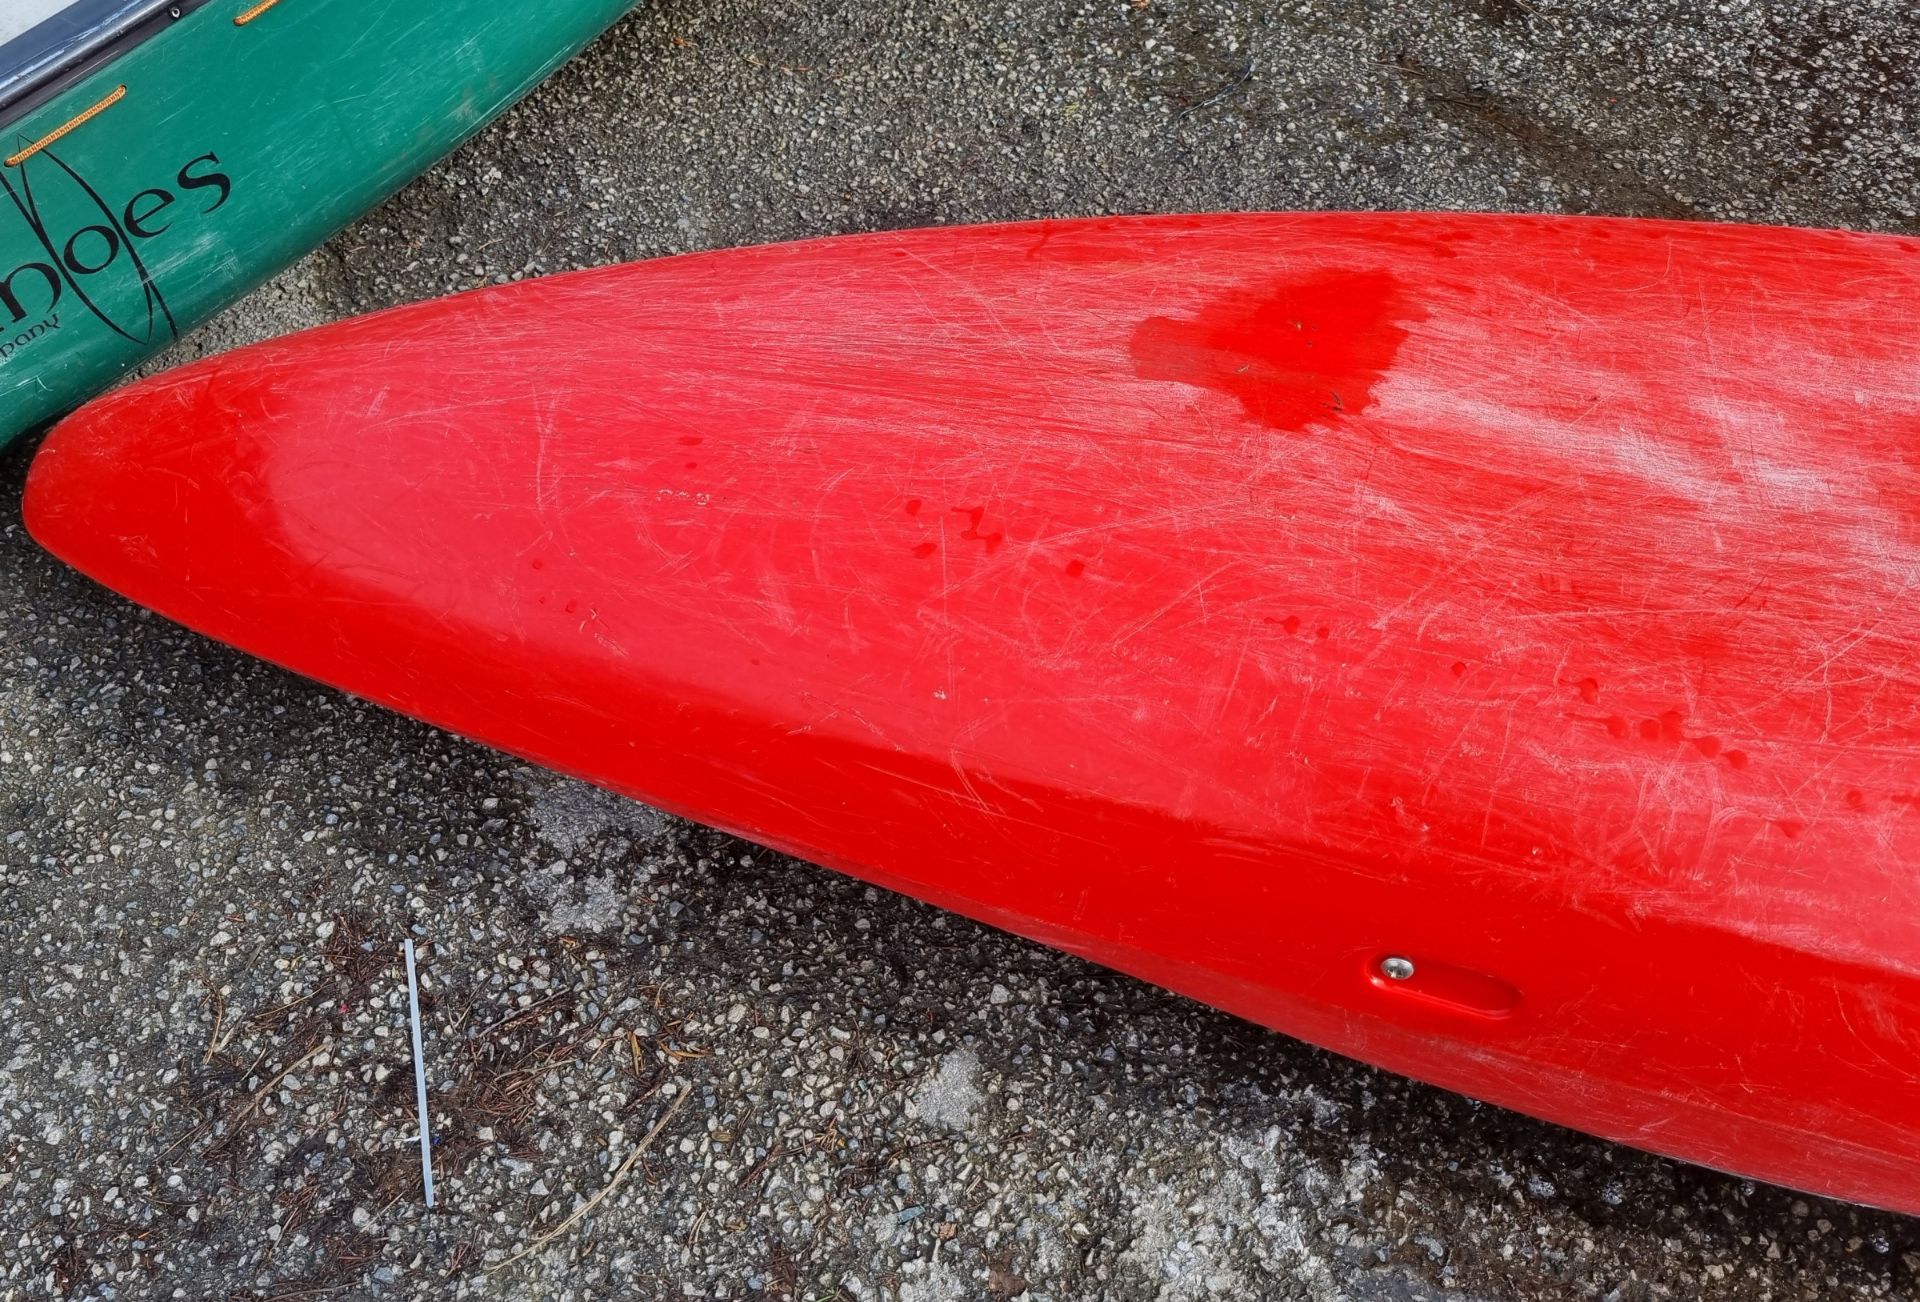 Dagger Katana polyethylene kayak - red - W 3200 x D 660 x H 420mm - Image 7 of 8